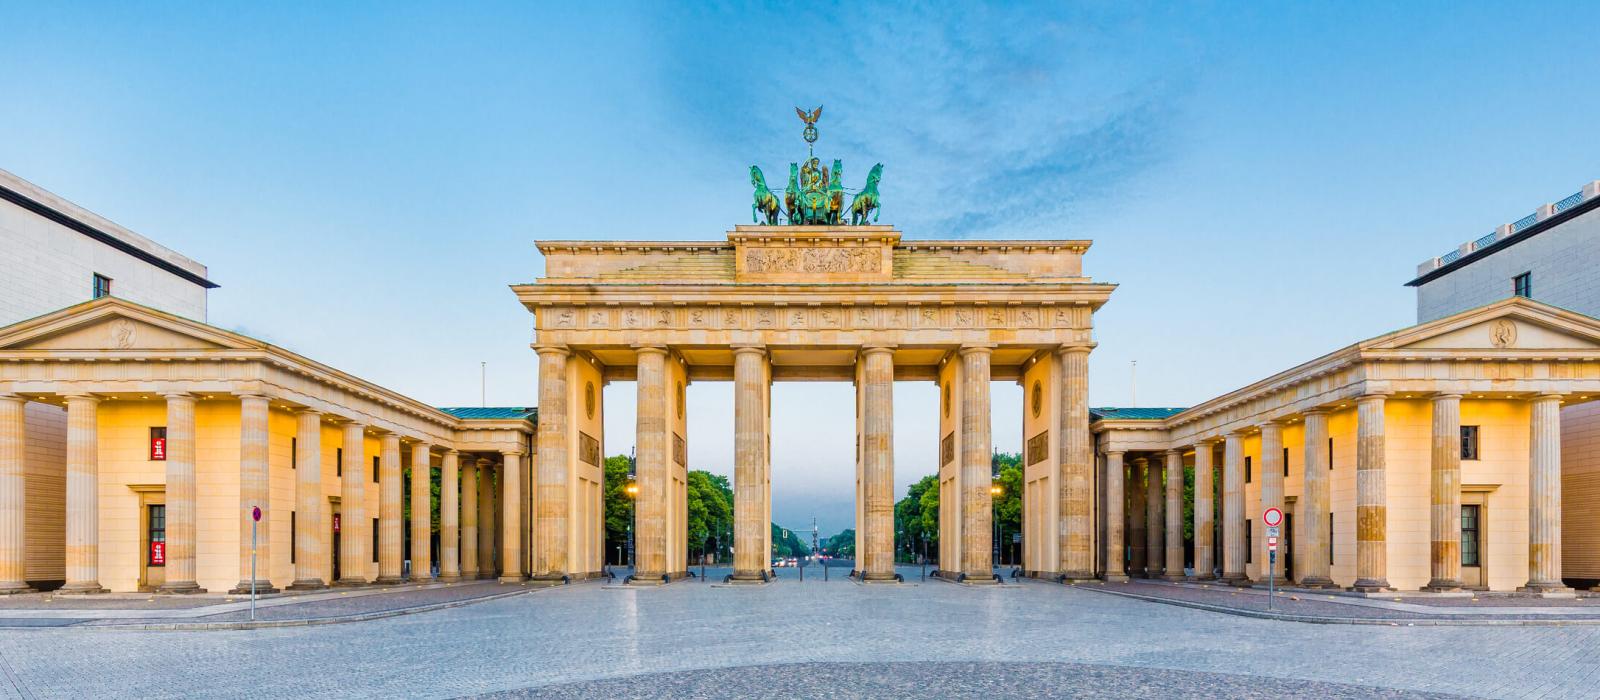 Brandenburg Gate panorama, Berlin, Germany